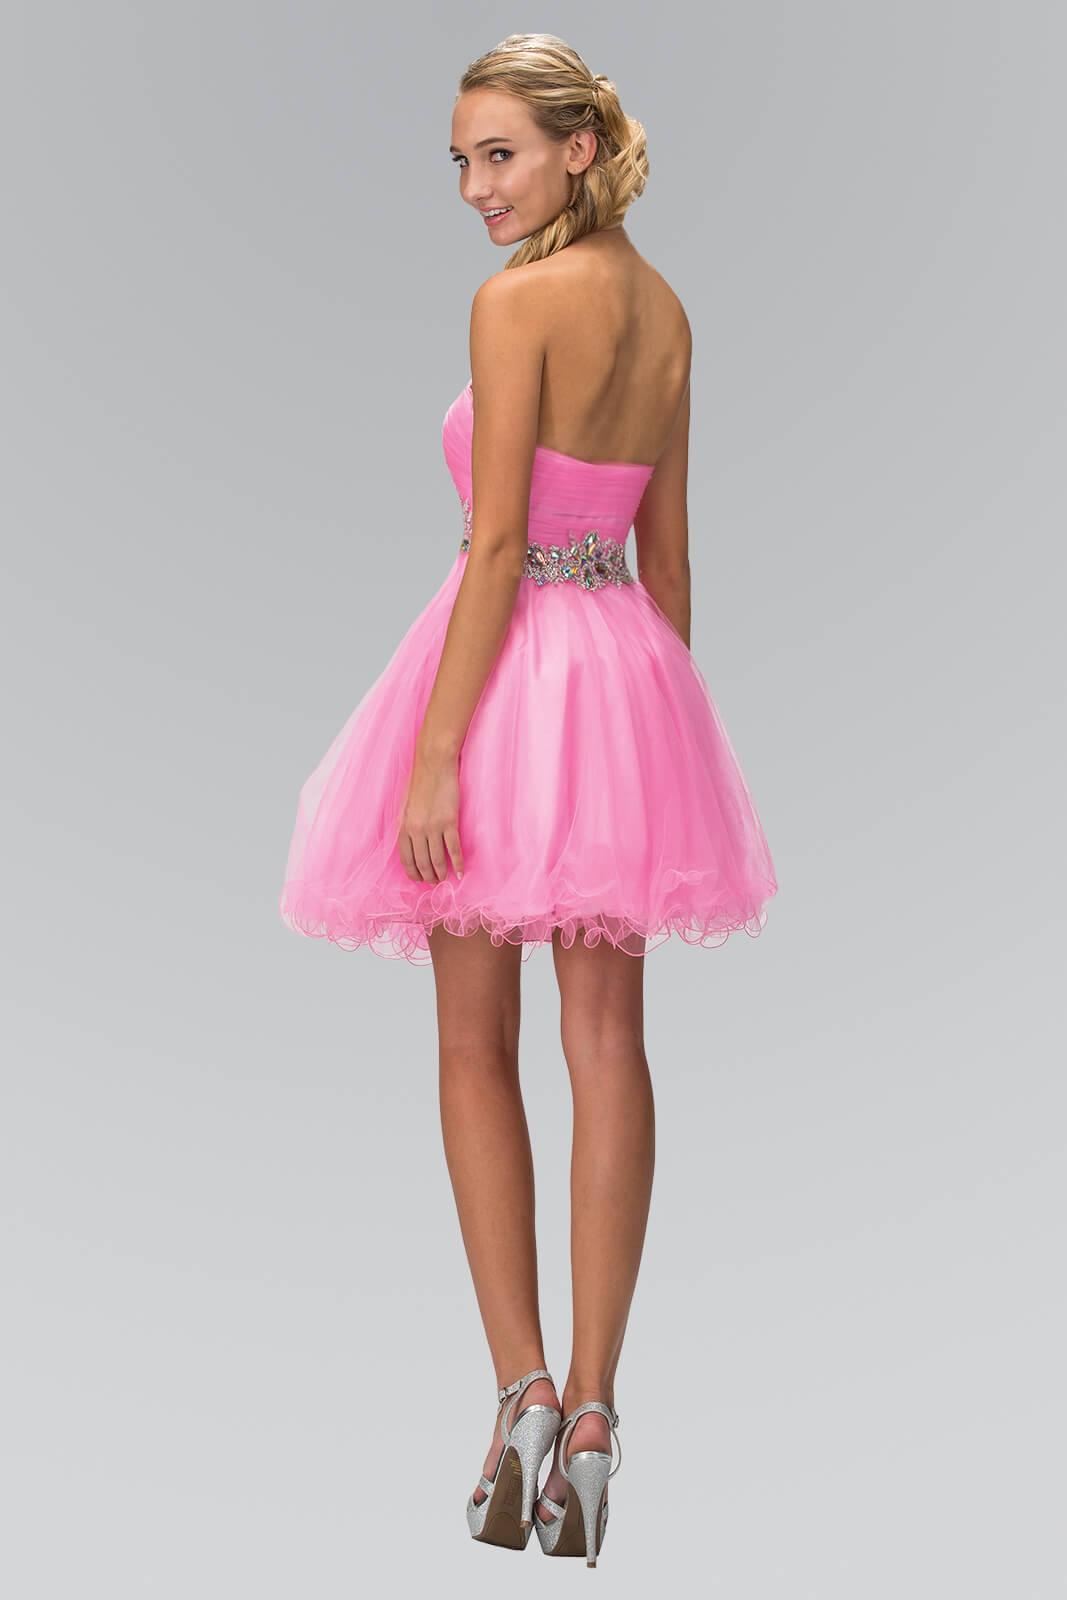 Sweetheart Prom Dress Formal Homecoming - The Dress Outlet Elizabeth K